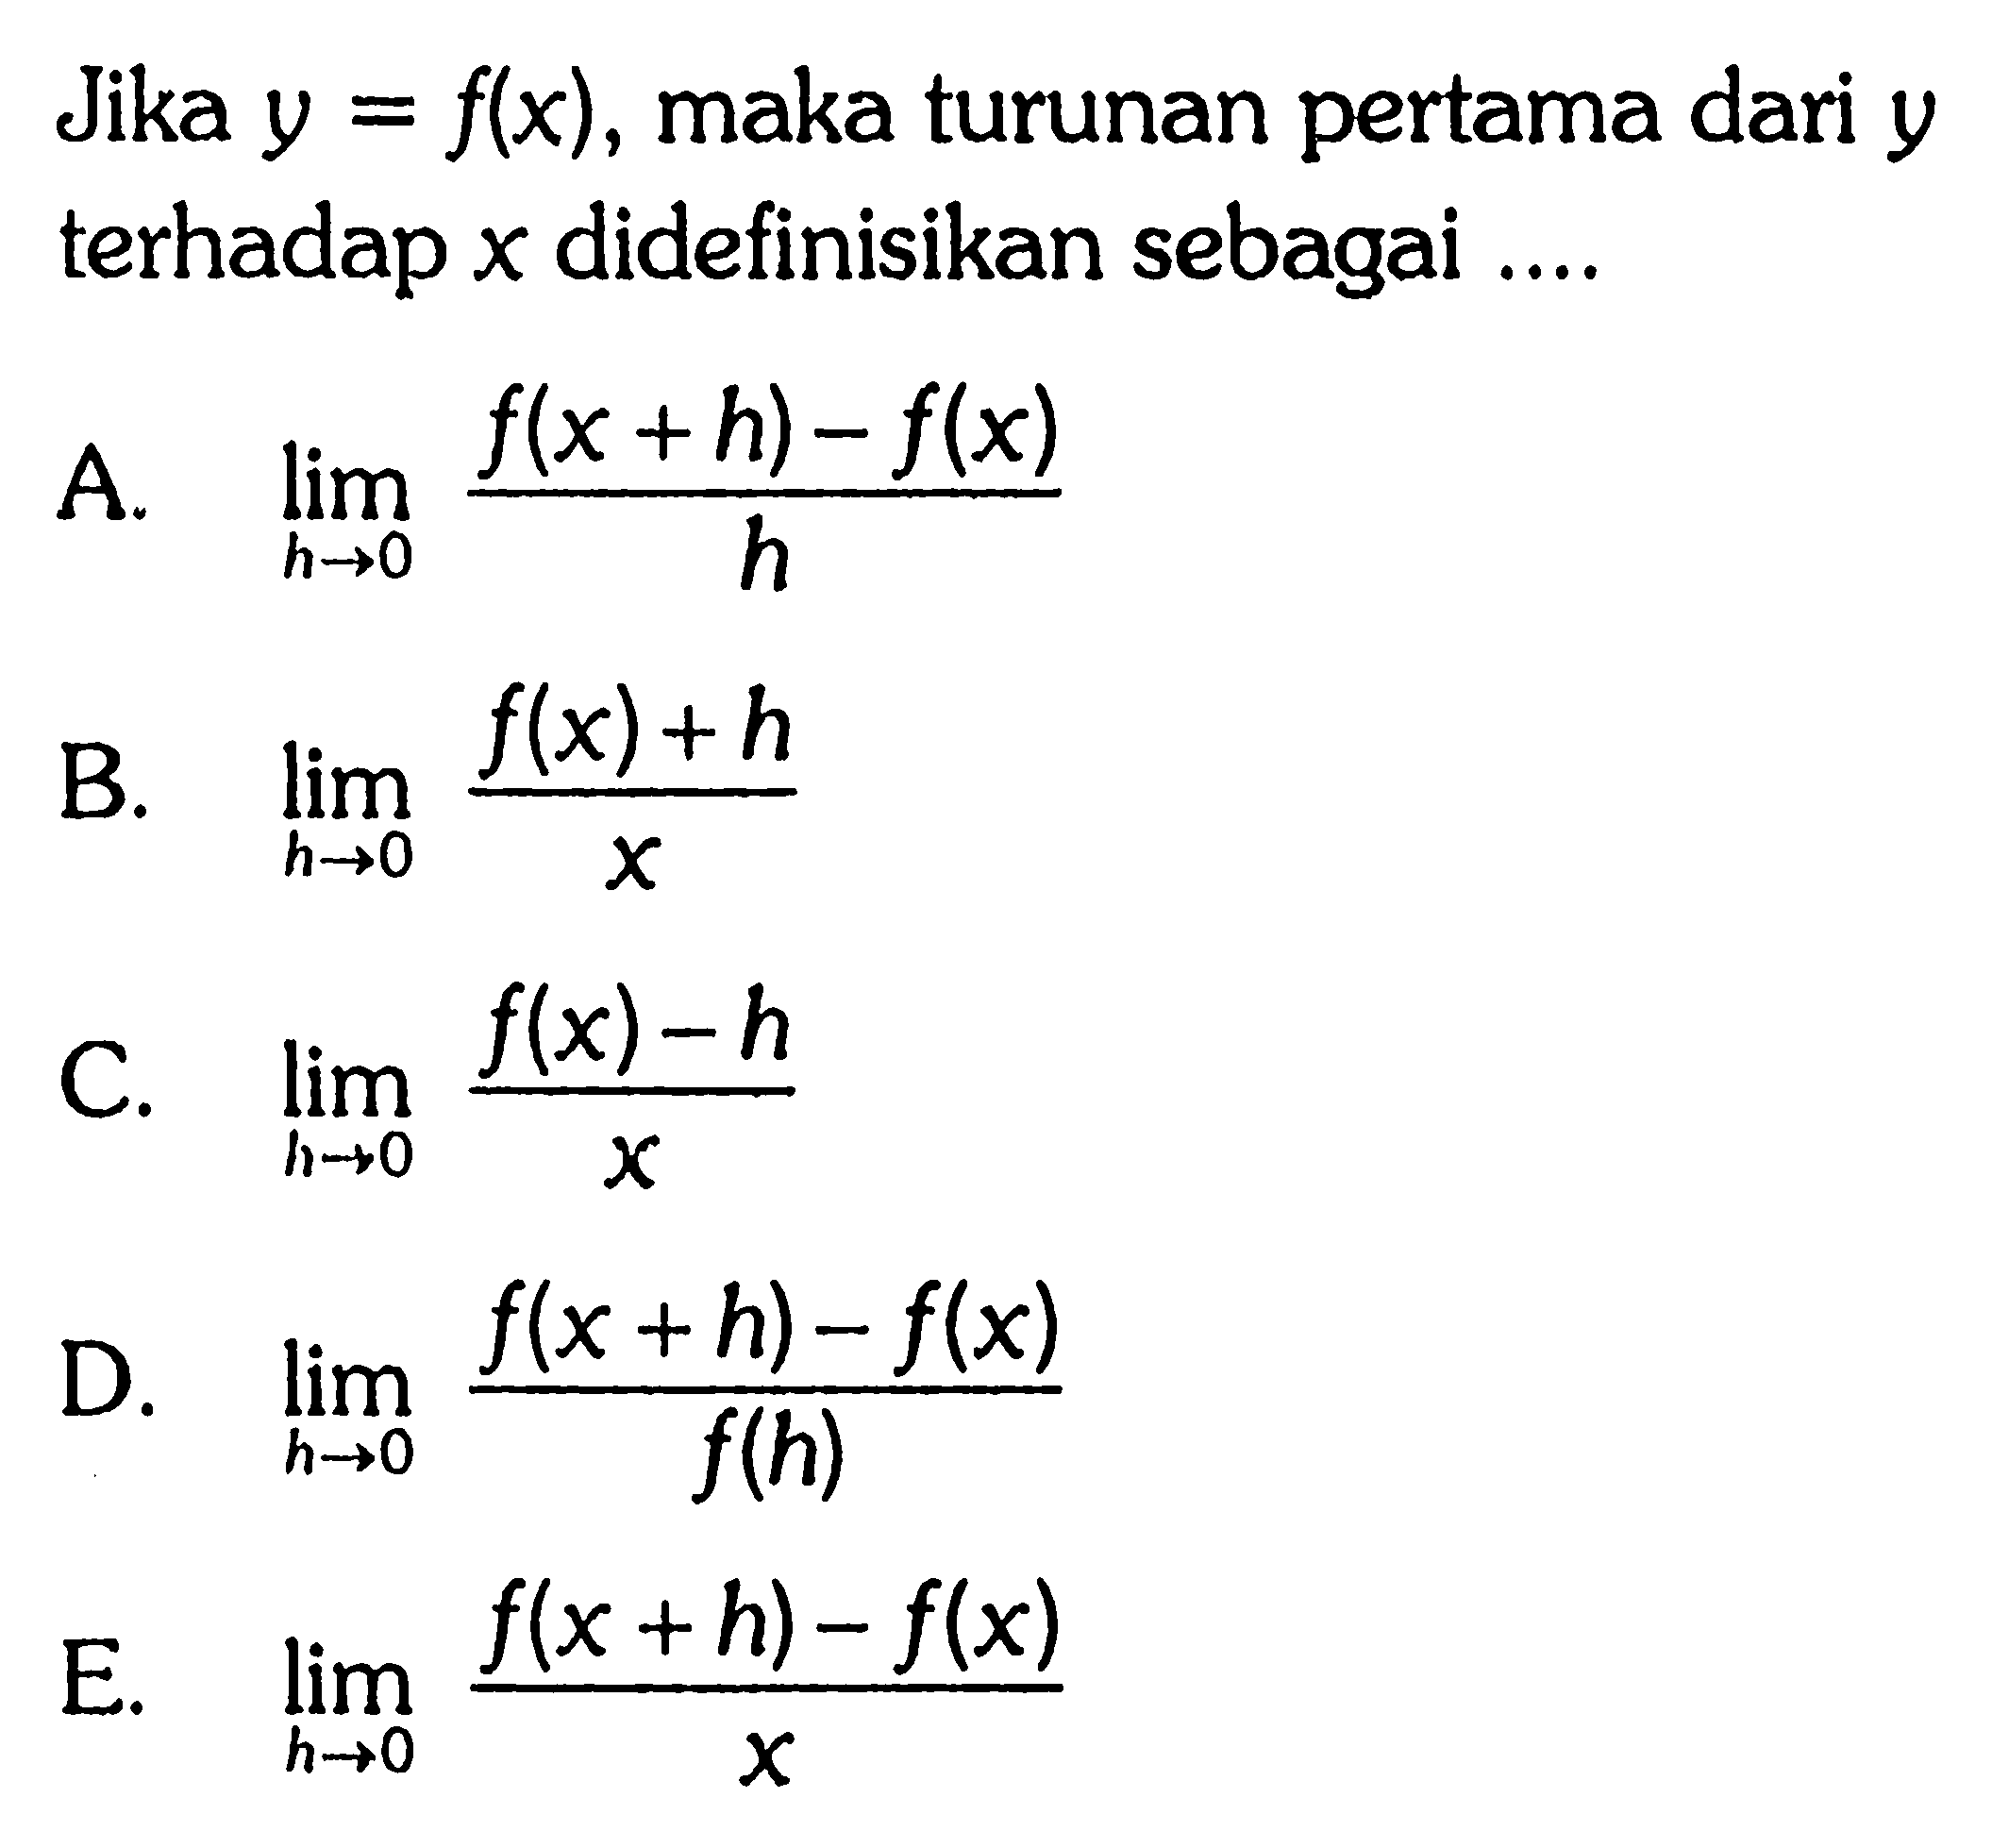 Jika  y=f(x), maka turunan pertama dari  y  terhadap  x  didefinisikan sebagai  .... 
A.  lim  h->0 (f(x+h)-f(x))/h 
B.  lim  h->0 (f(x)+h)/x 
C.  lim  h->0 (f(x)-h)/x 
D.  lim  h->0 (f(x+h)-f(x))/f(h) 
E.  lim  h->0 (f(x+h)-f(x))/x 